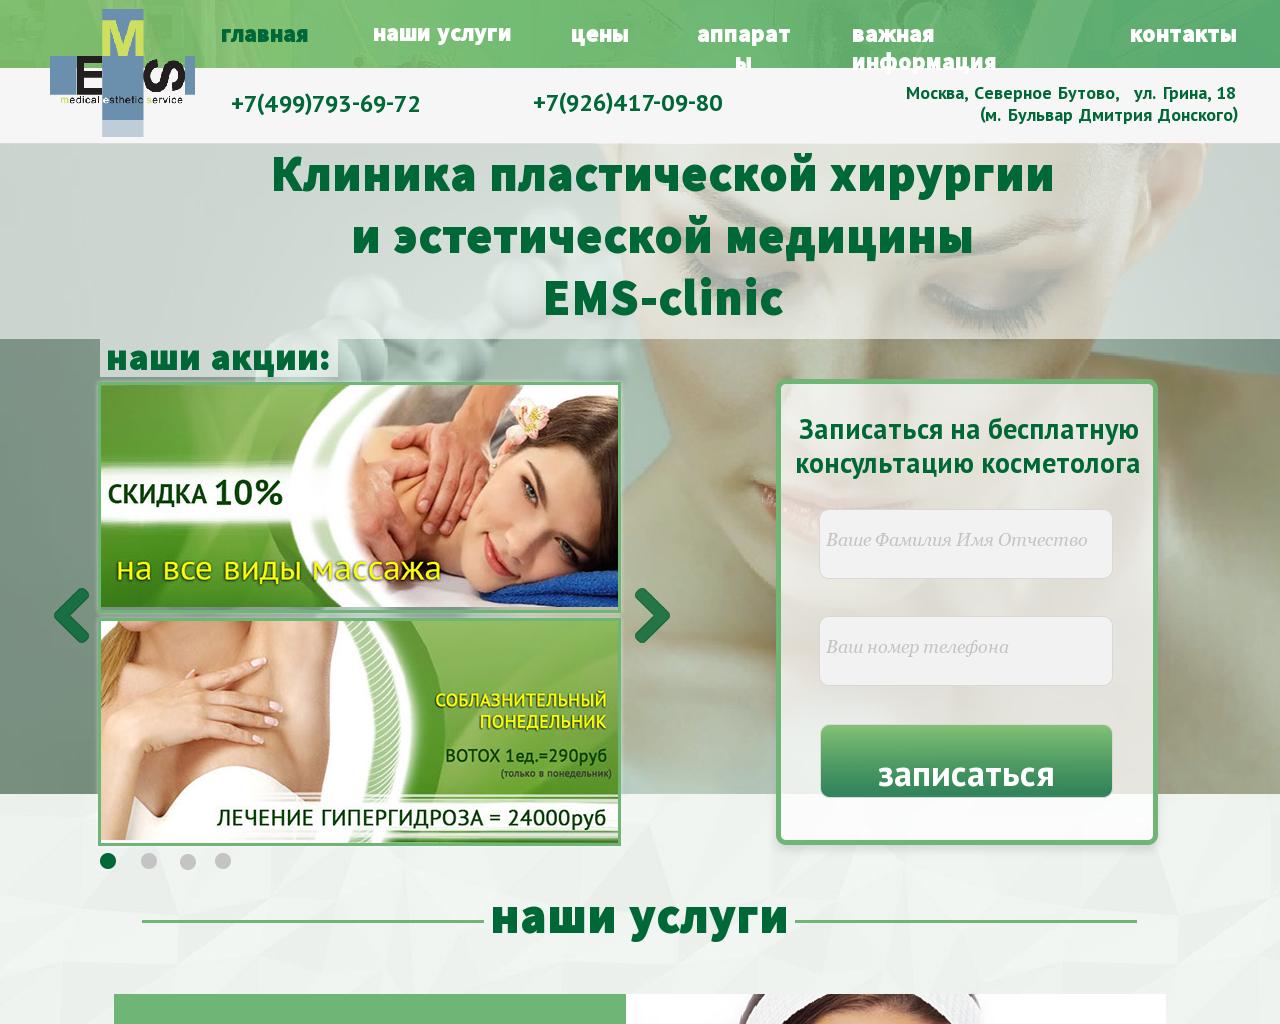 Изображение сайта ems-clinic.ru в разрешении 1280x1024